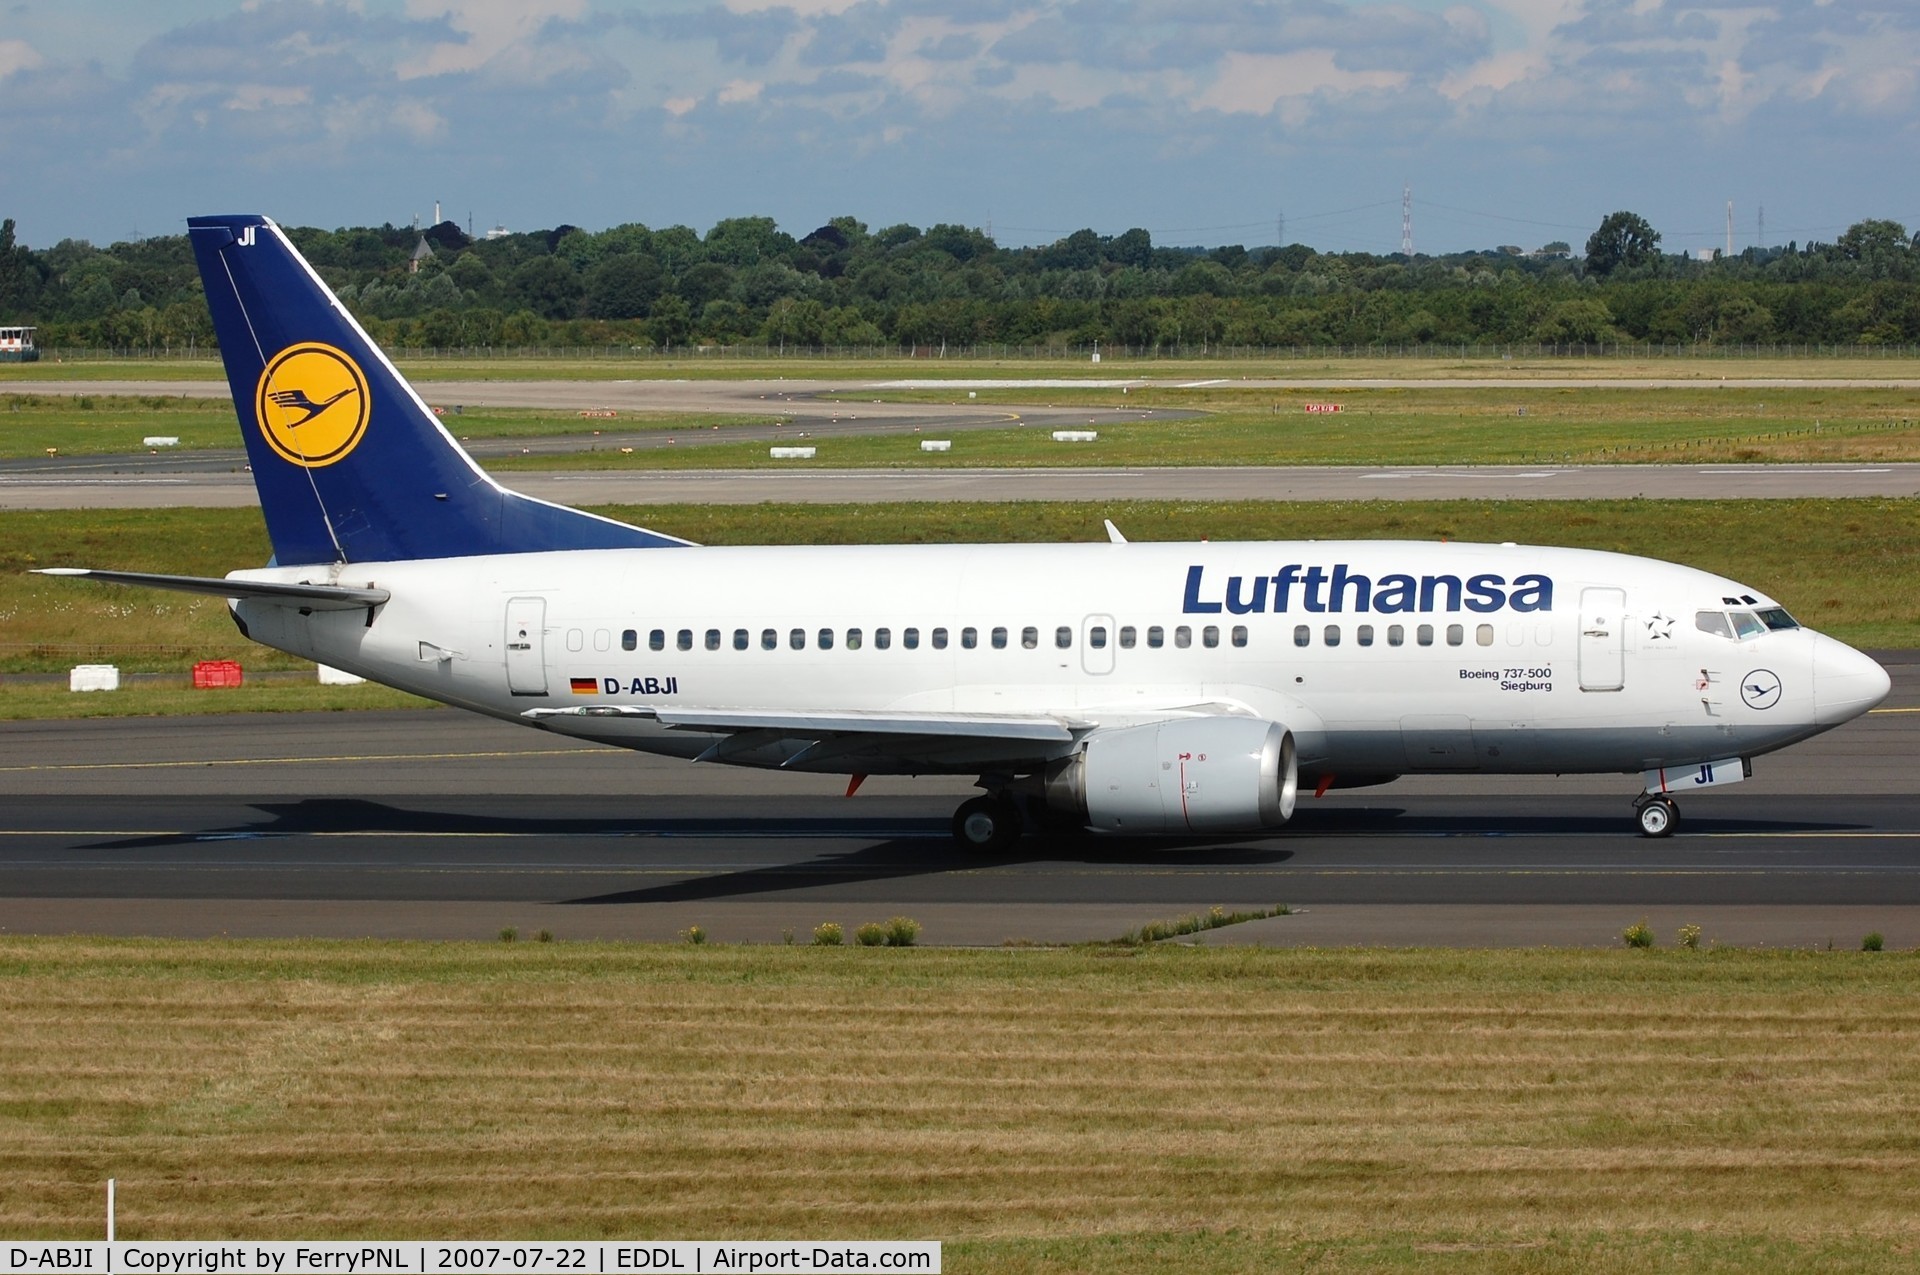 D-ABJI, 1991 Boeing 737-530 C/N 25358, Lufthansa B735, wfu 2011 and preserved at FRA